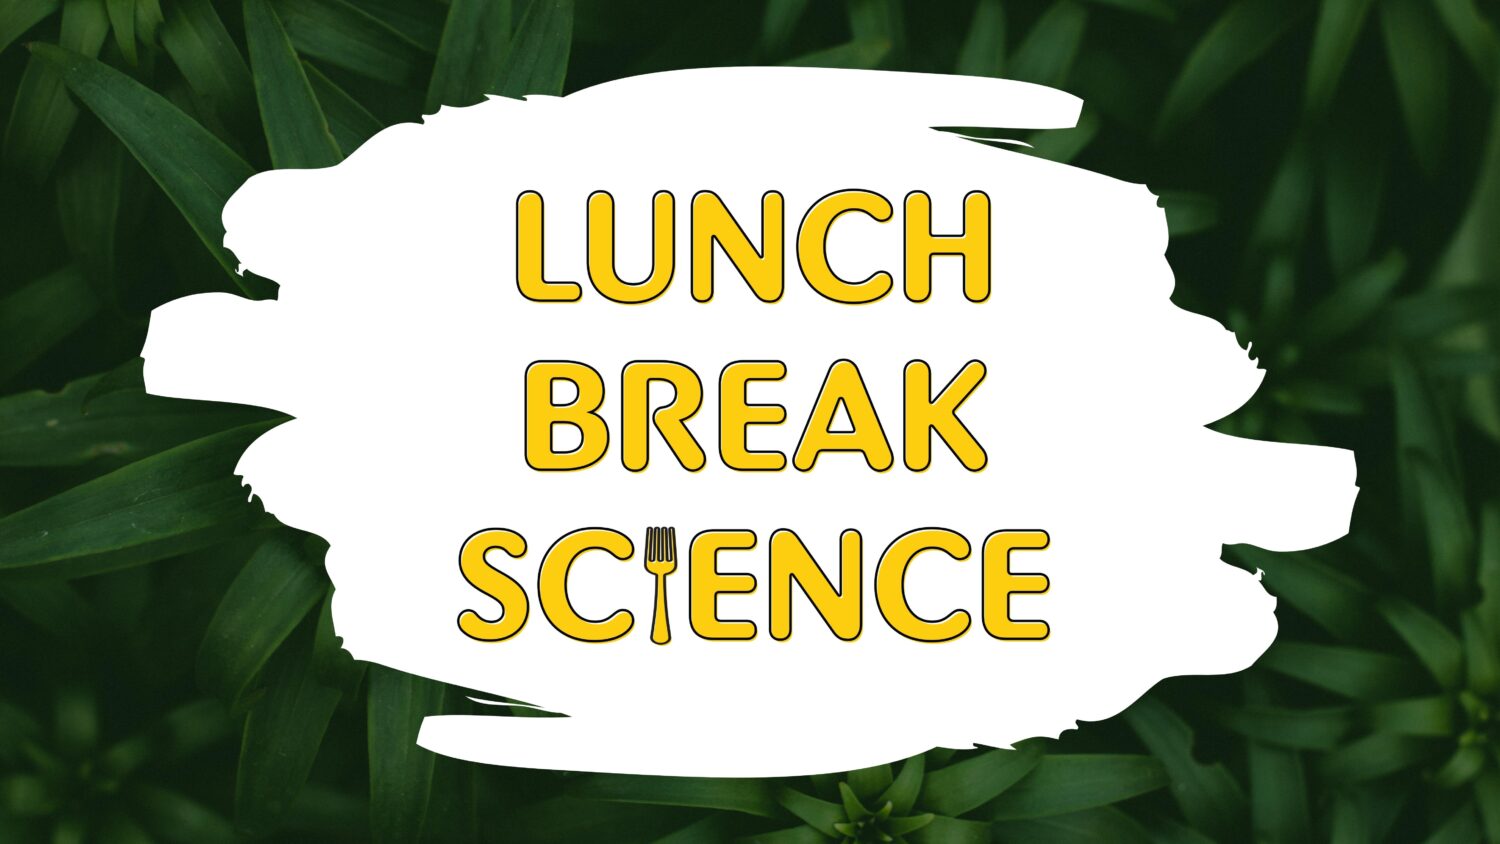 Lunch Break Science logo in front of jungle leaves